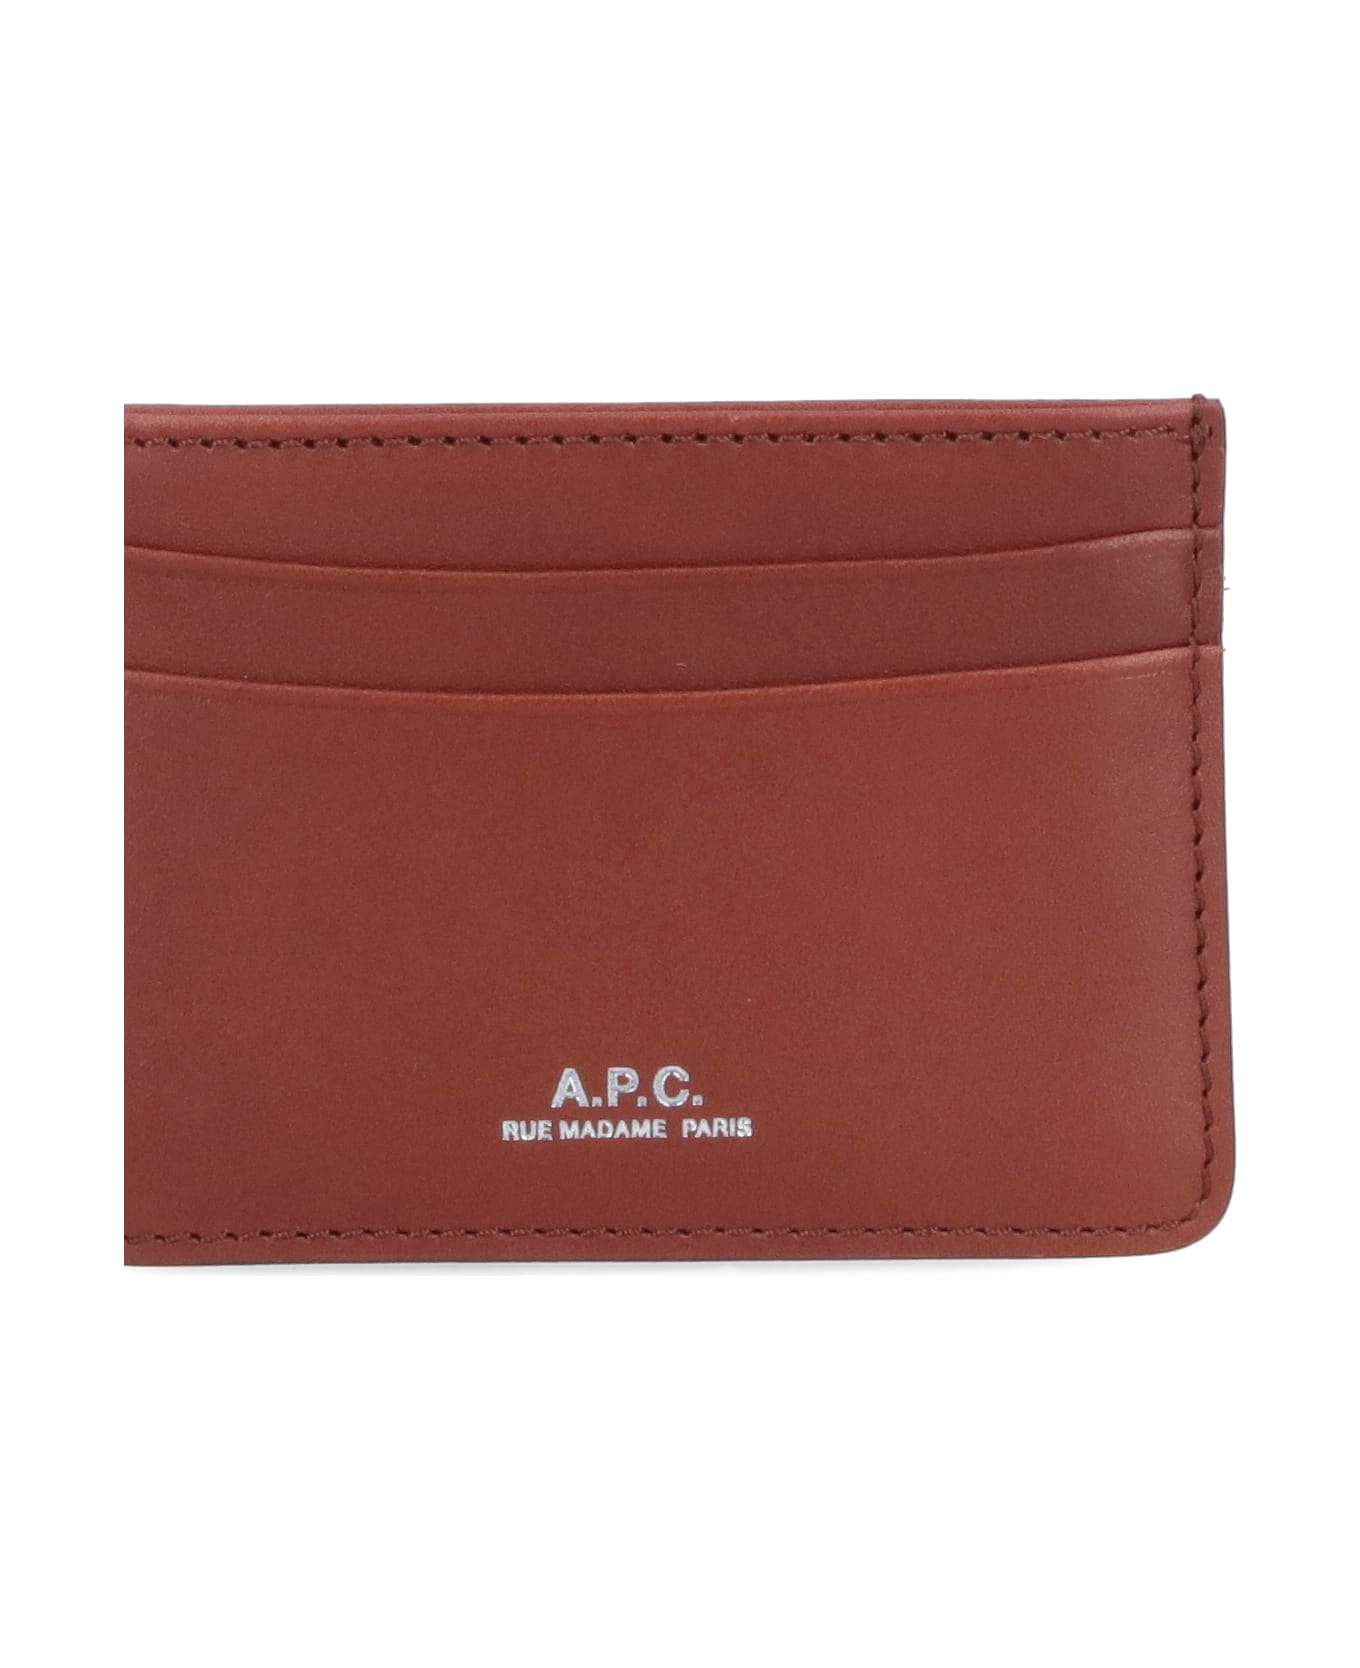 A.P.C. Card Case - Brown